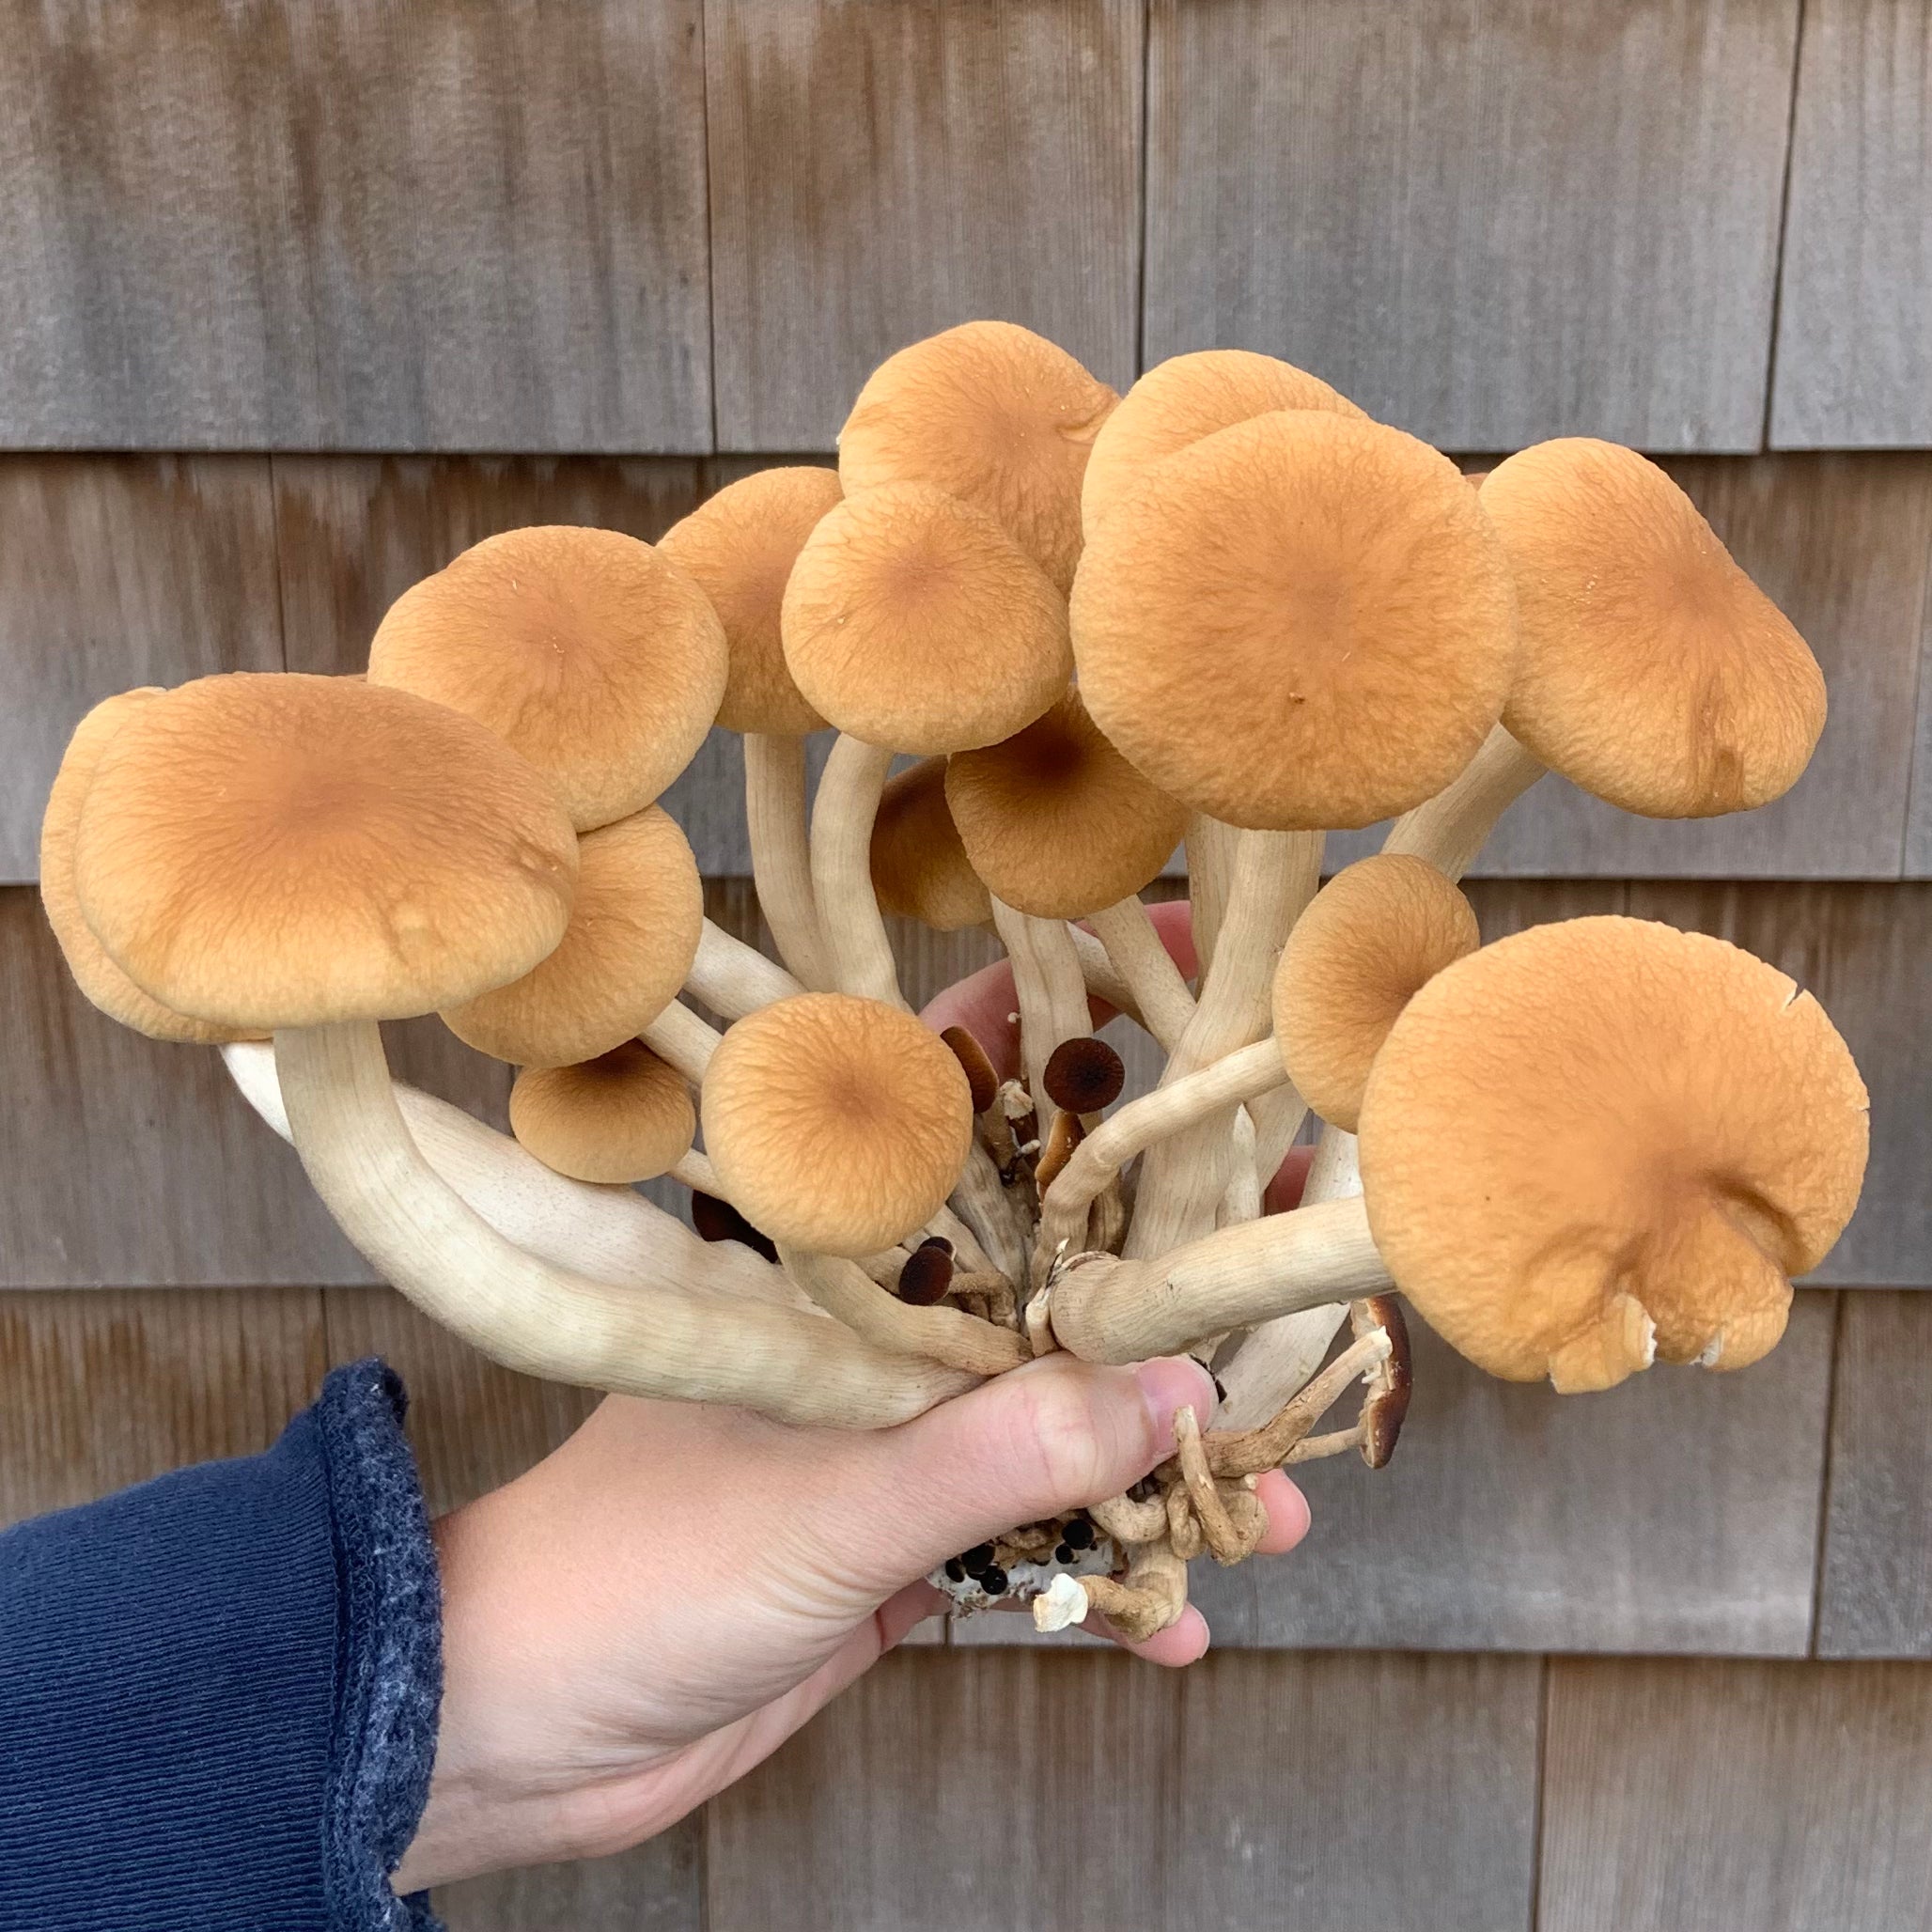 NYC Trial Mushroom Lover's Share